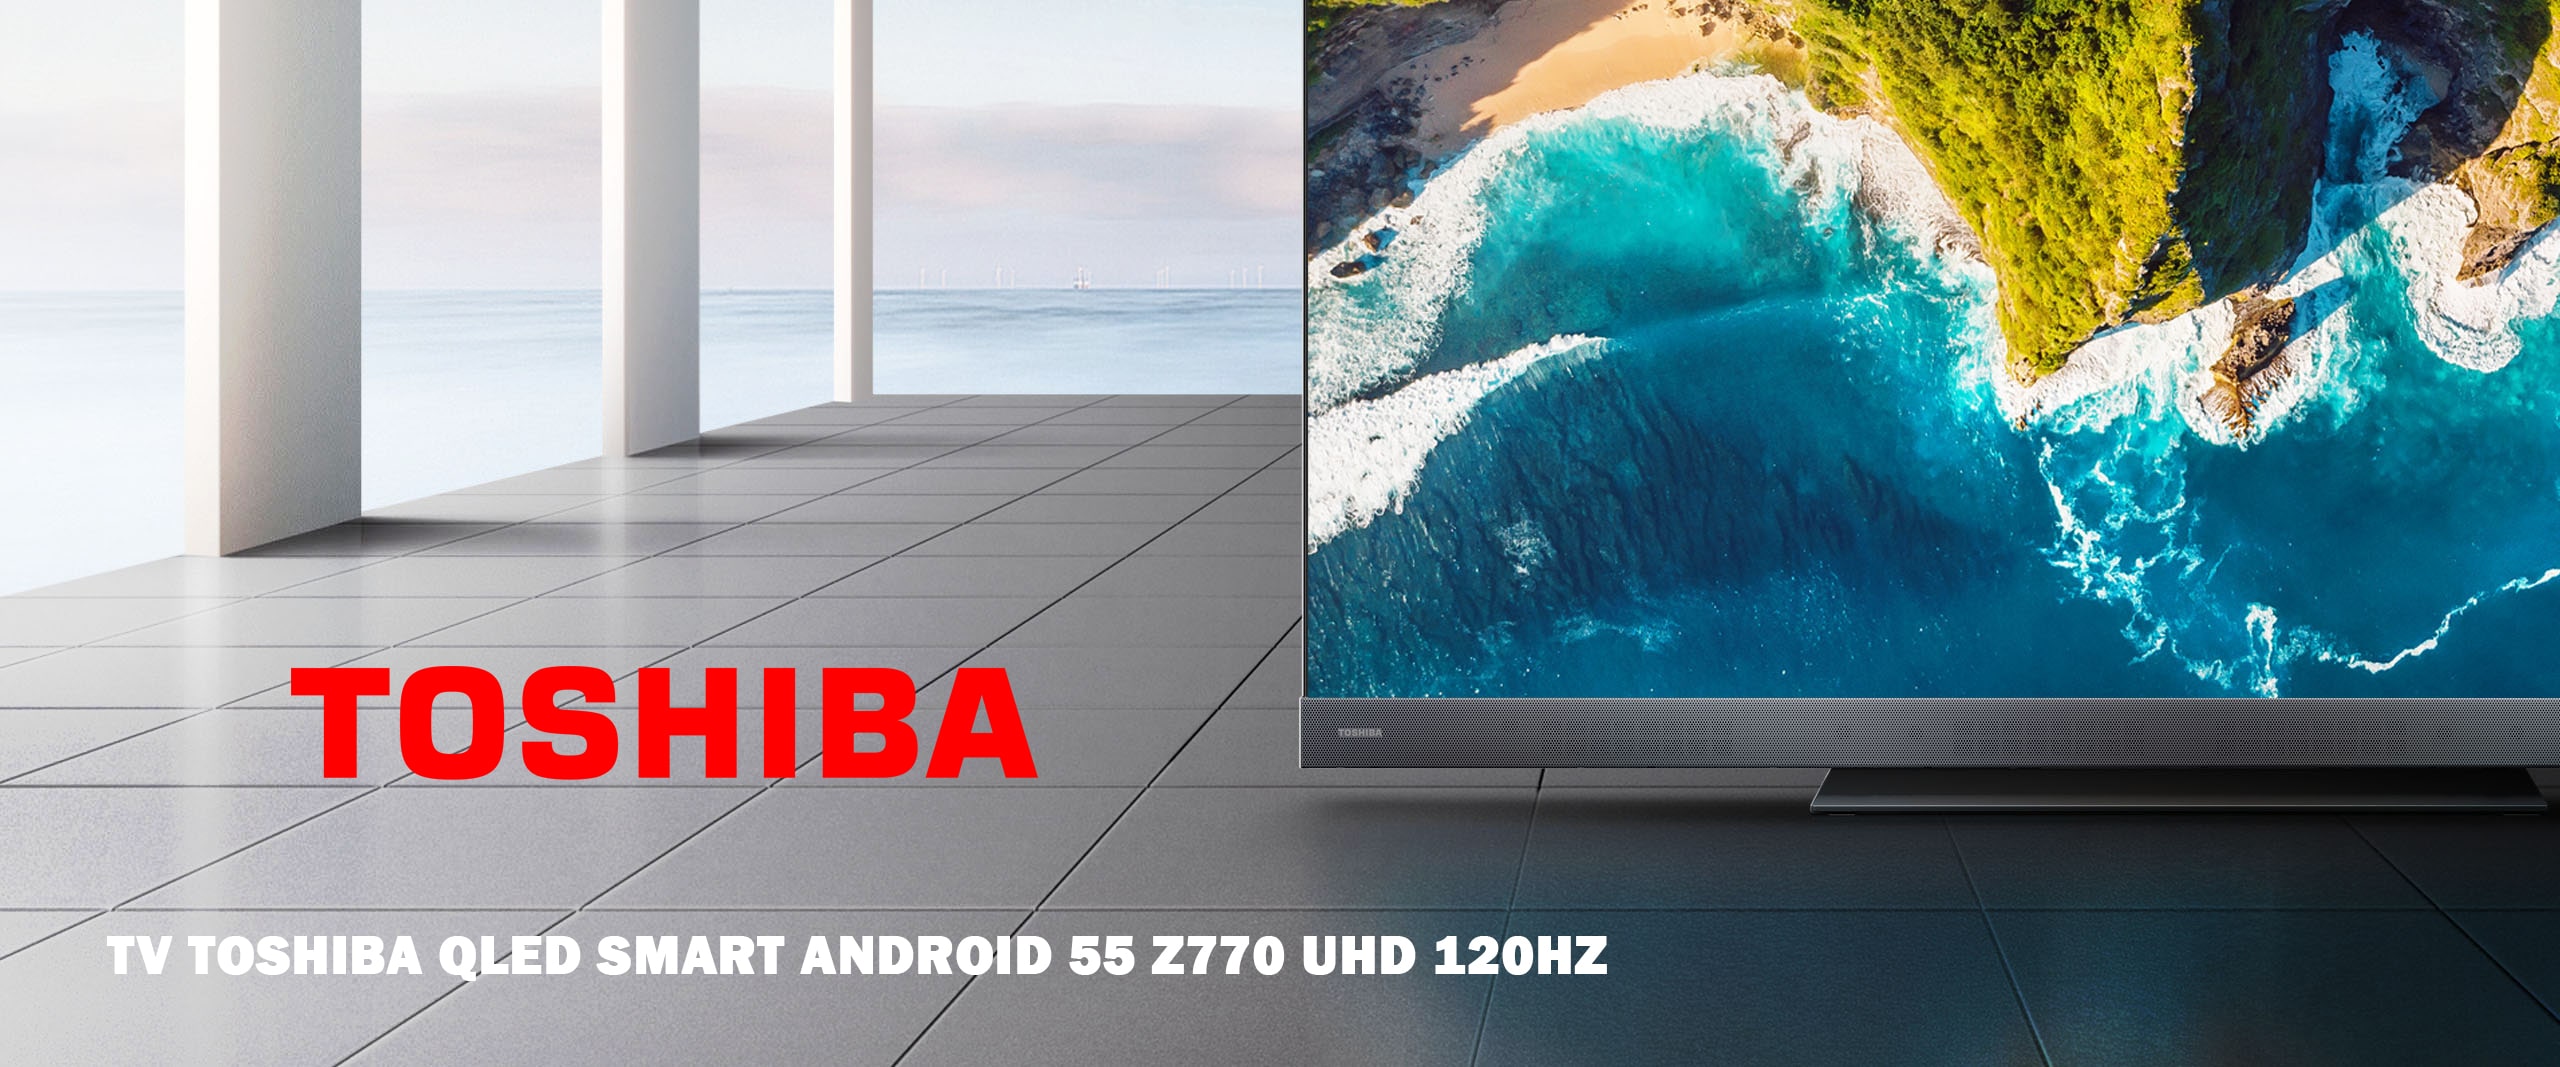 TV TOSHIBA QLED SMART ANDROID 55 Z770 UHD 120HZ